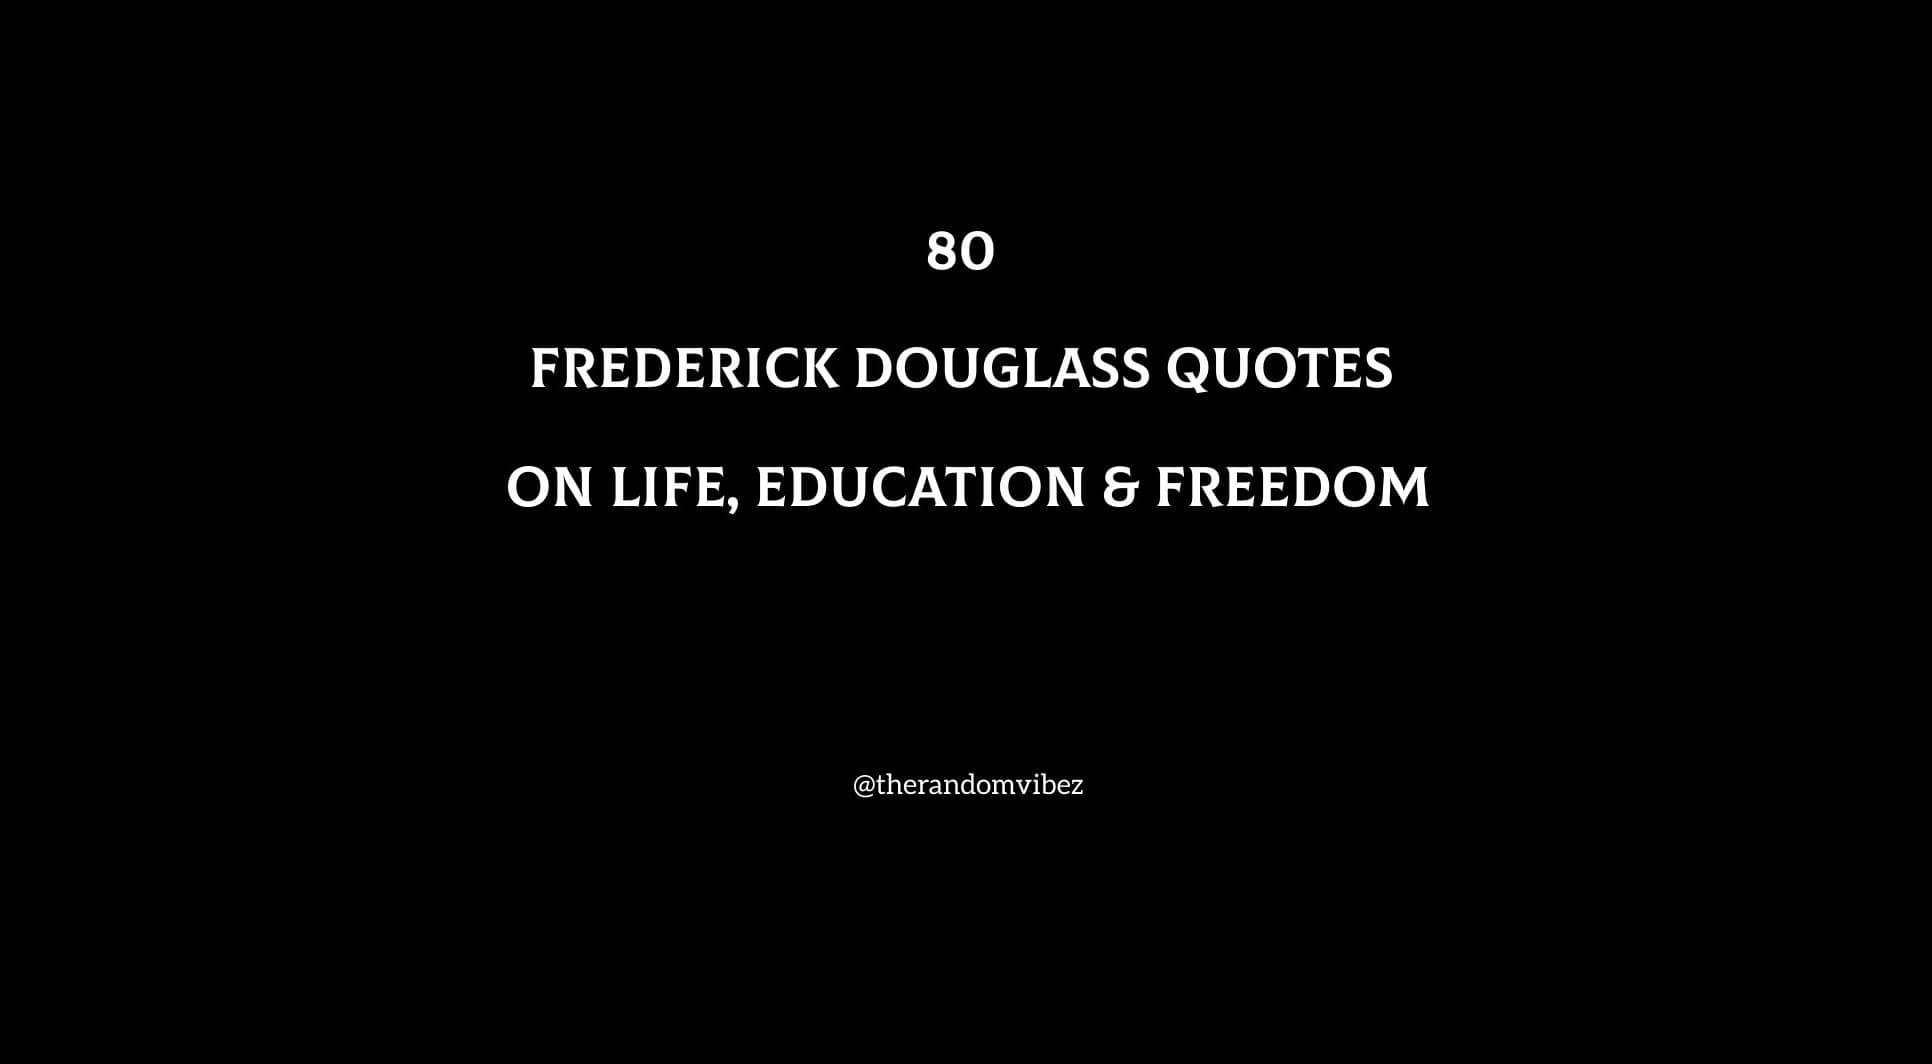 80 Frederick Douglass Quotes On Life, Education & Freedom